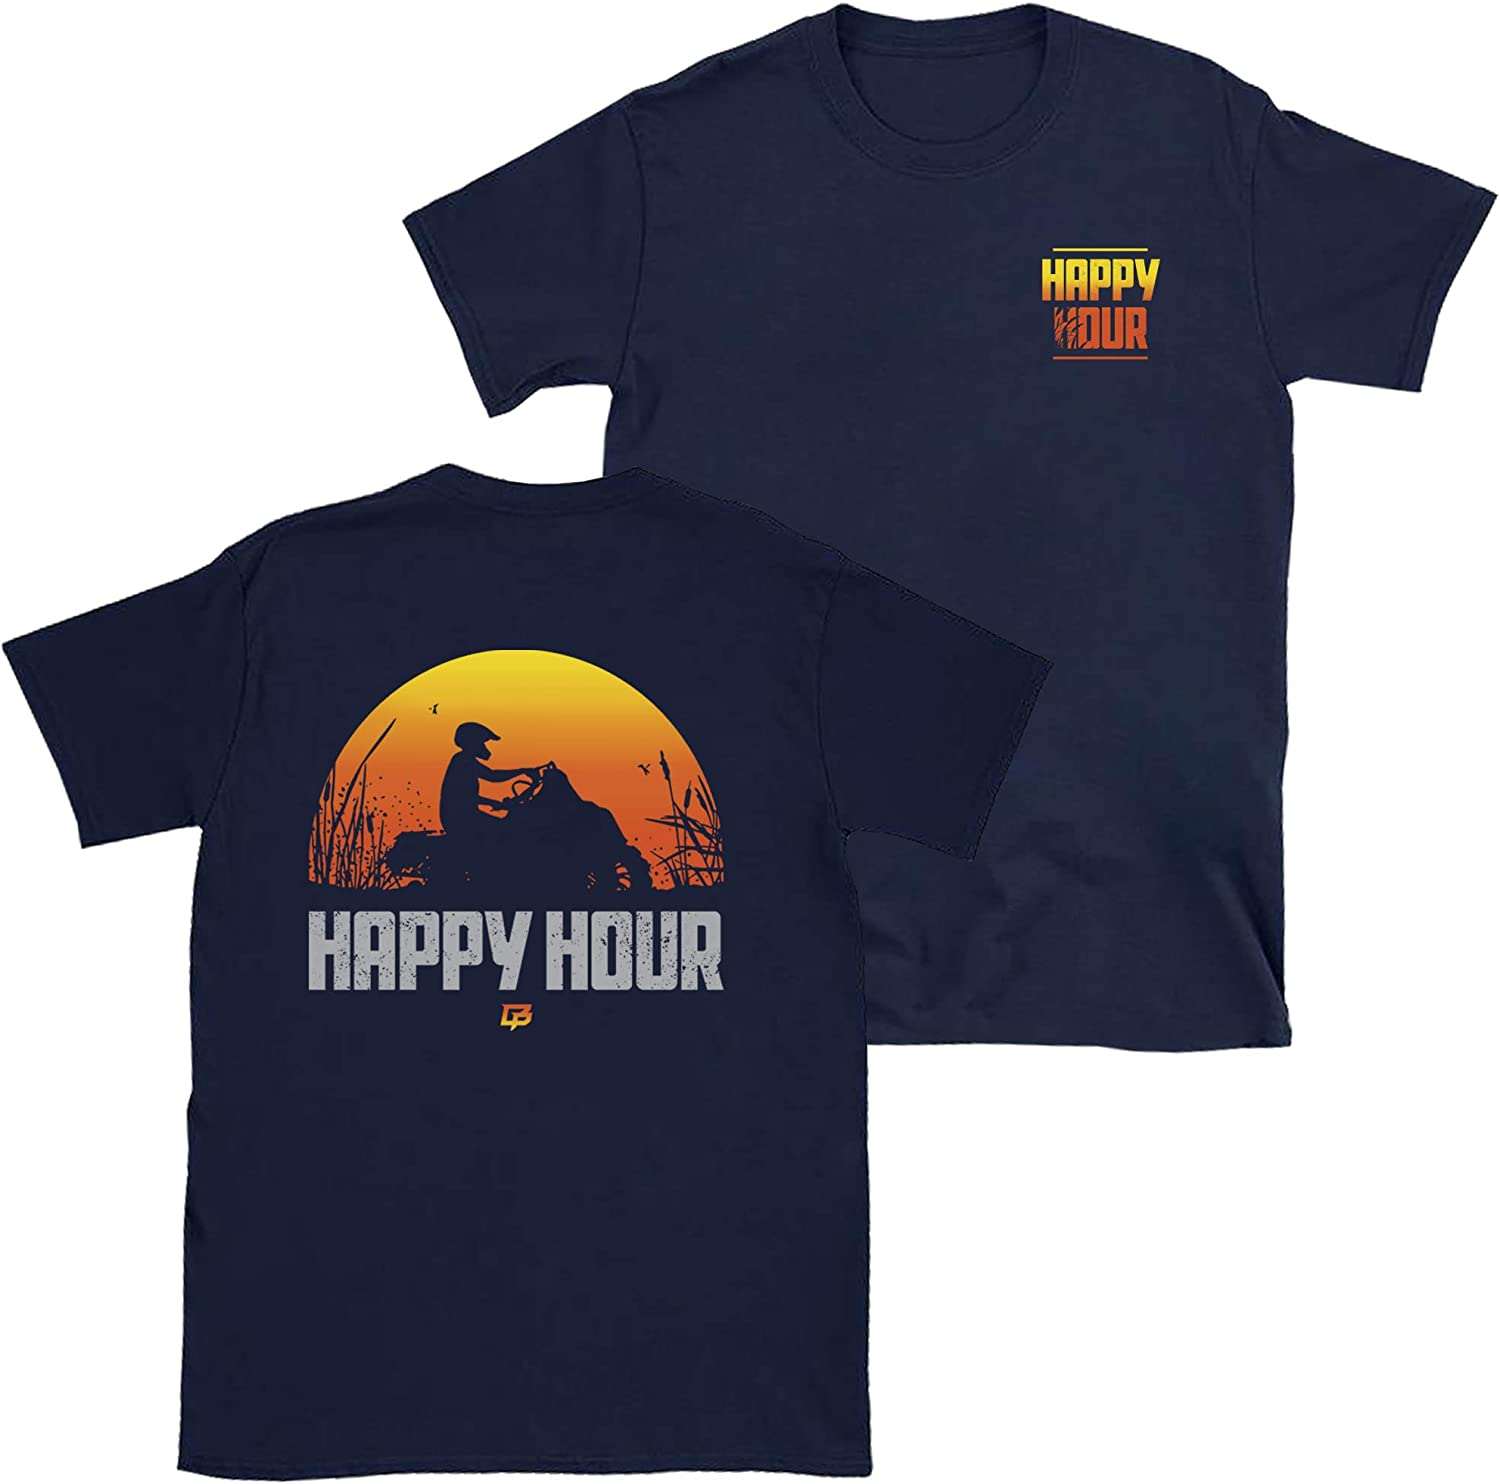 Braydon Price T-shirt, Price Hour T Shirt Navy T-Shirt | braydonpricemerch.shop